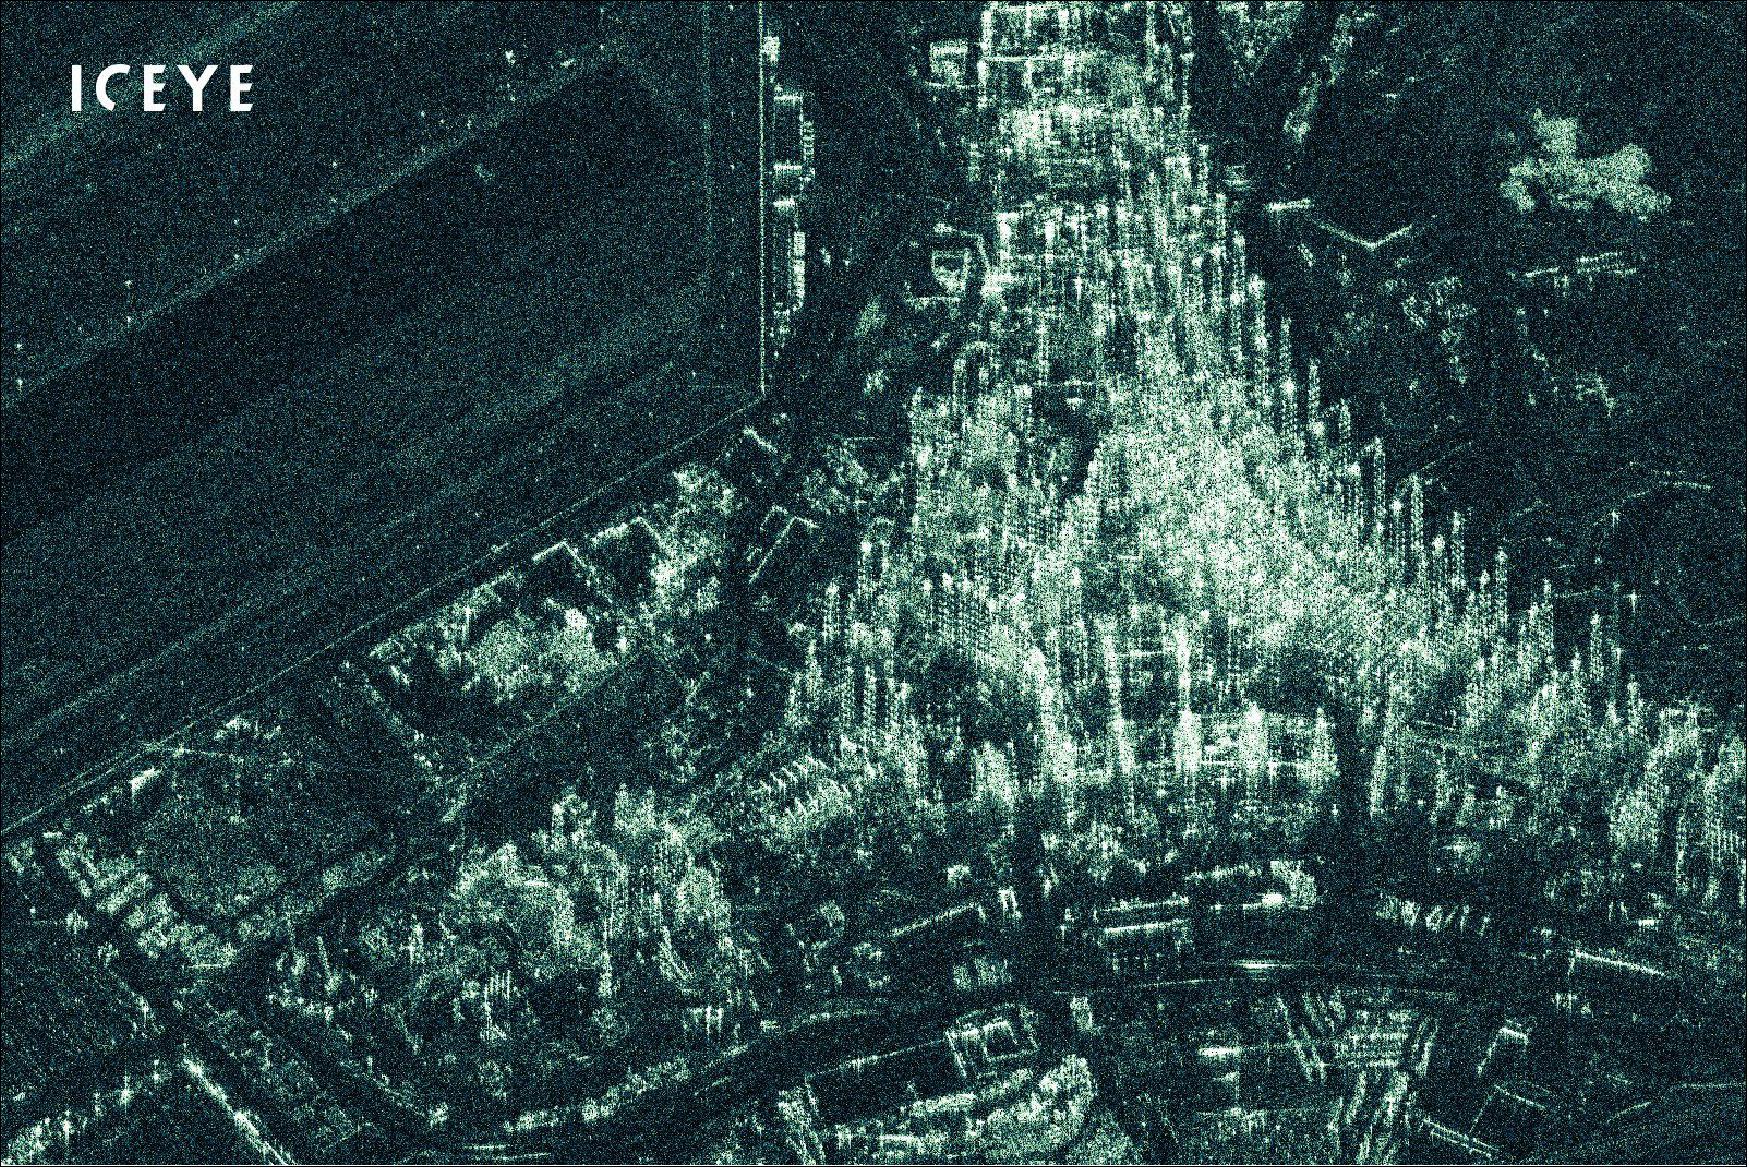 Figure 47: An ICEYE-X2 Spotlight radar satellite image of the Kuwait International Airport's new terminal under construction (image credit: ICEYE)